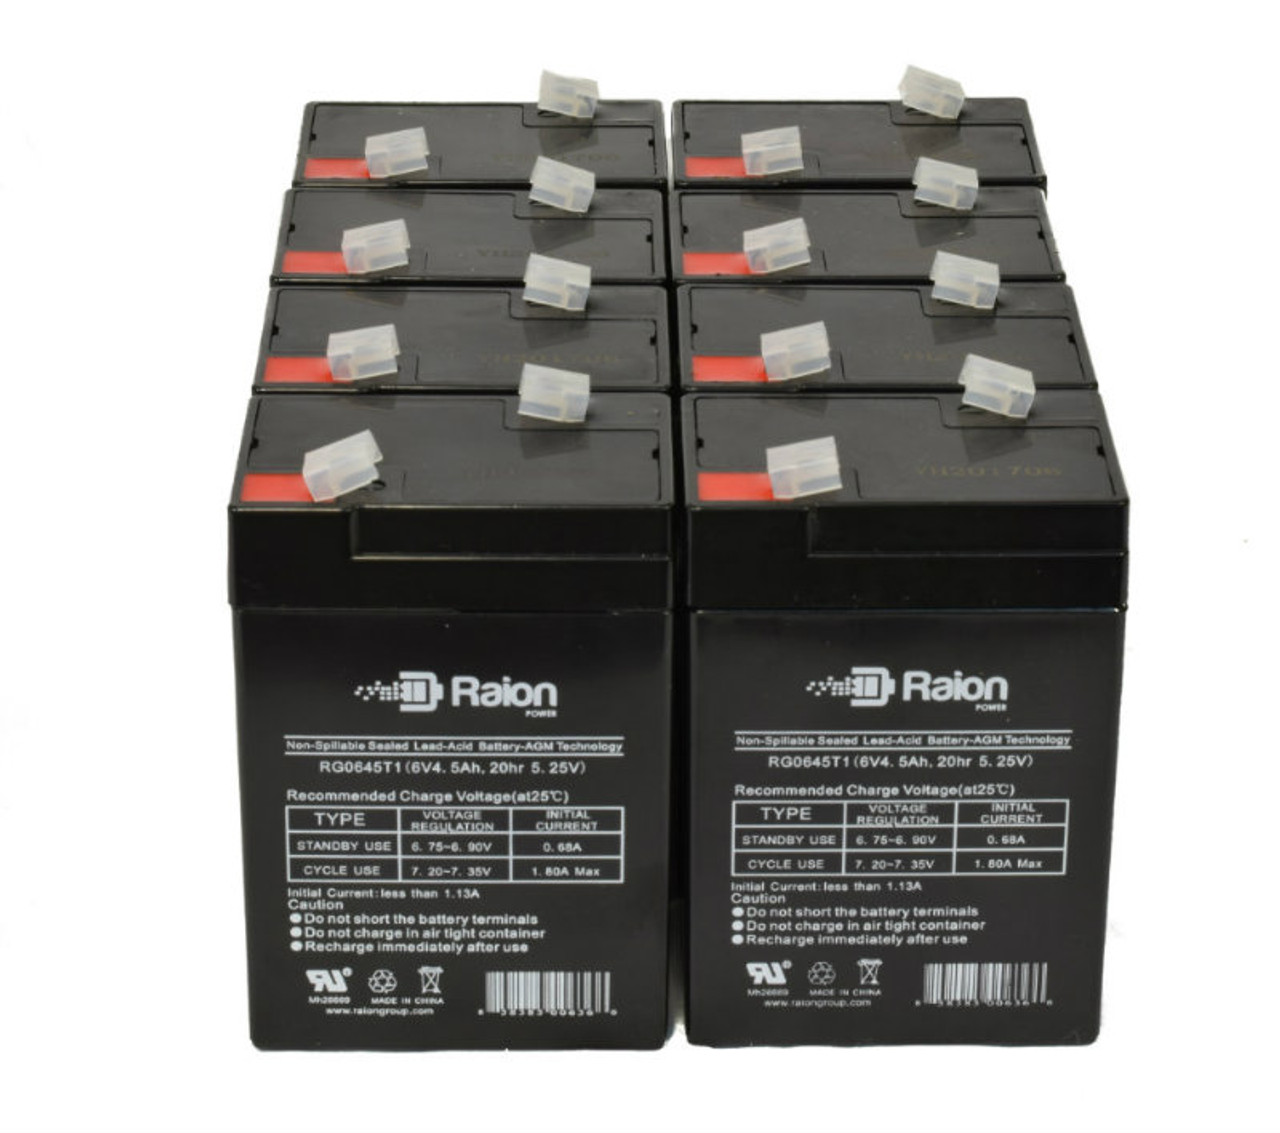 Raion Power 6 Volt 4.5Ah RG0645T1 Replacement Battery for Sonnenschein A206/3.8SK - 8 Pack